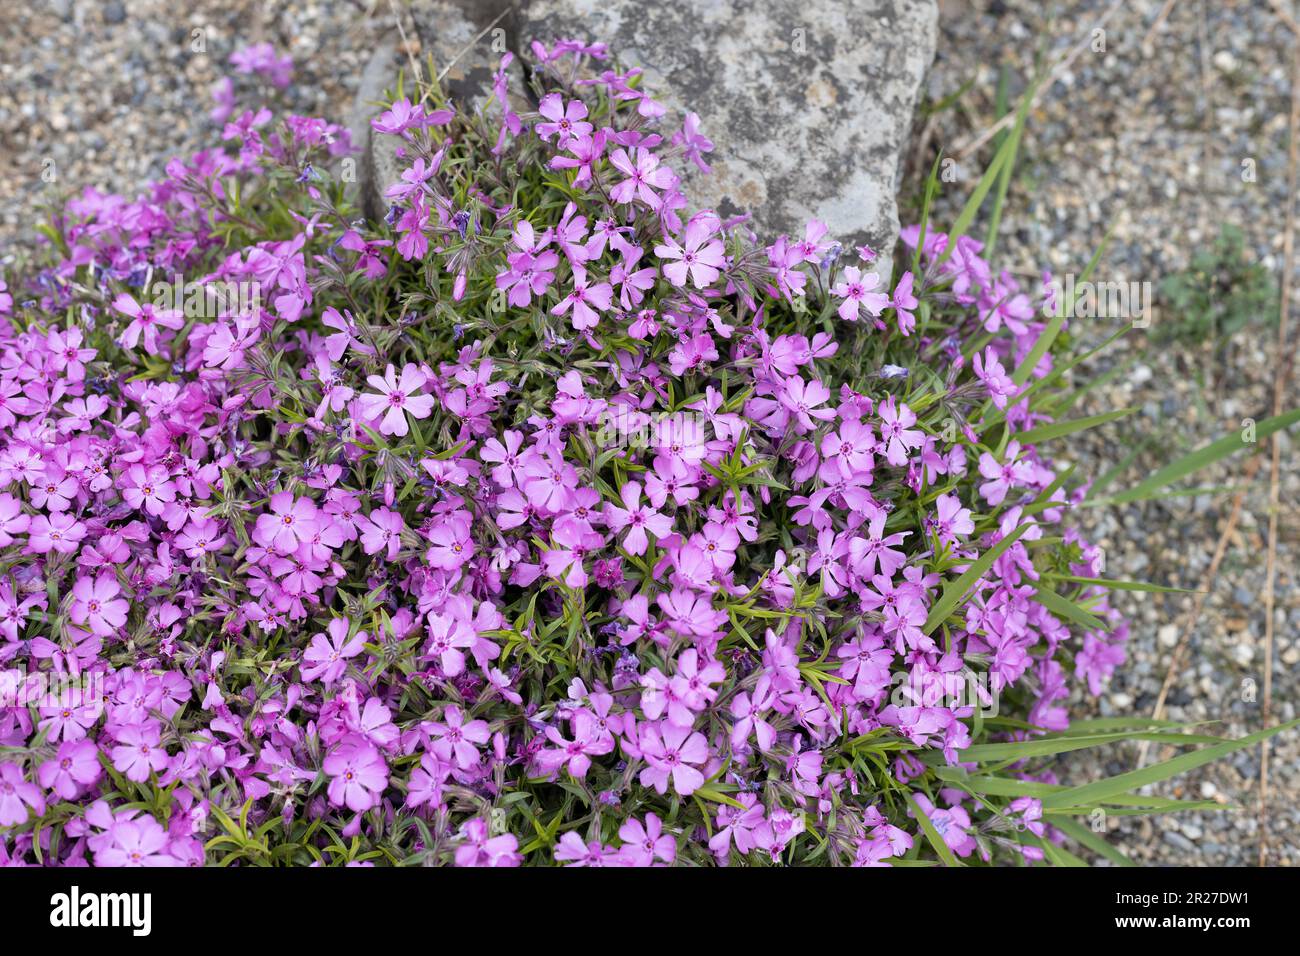 Phlox douglasii 'Crackerjack' flowers growing on a rock ledge. Stock Photo